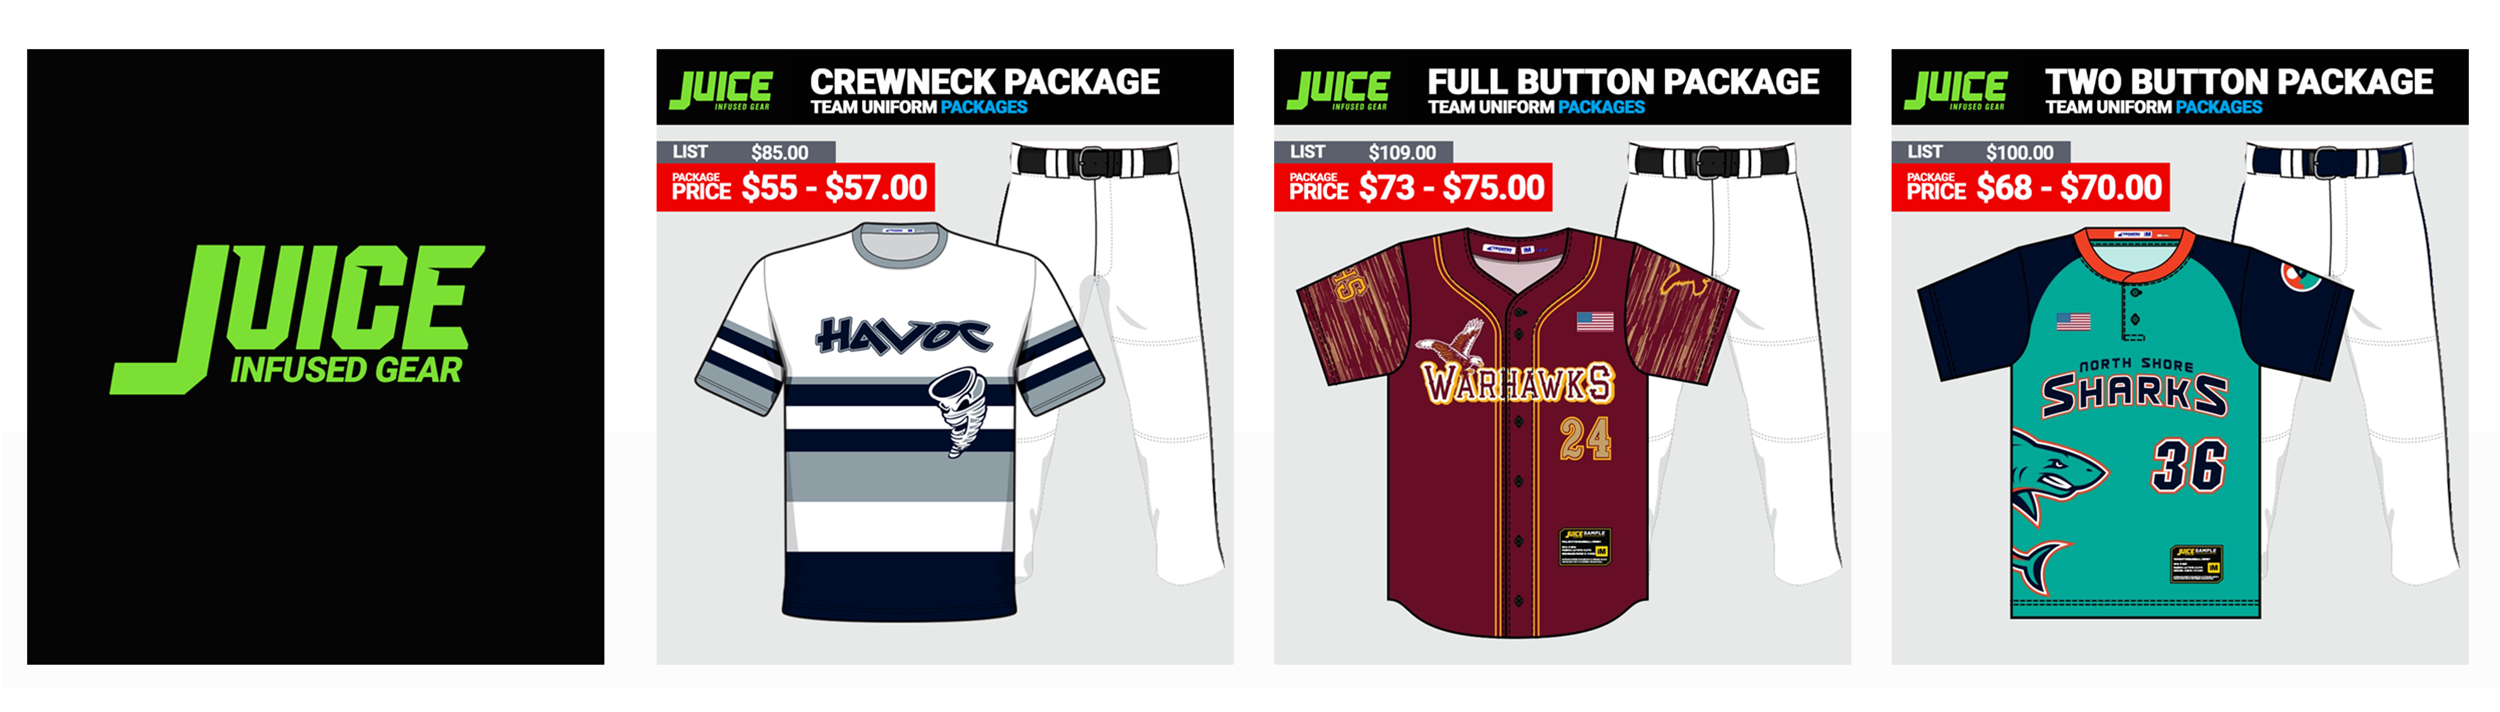 Champro Juice Baseball Uniform Packages